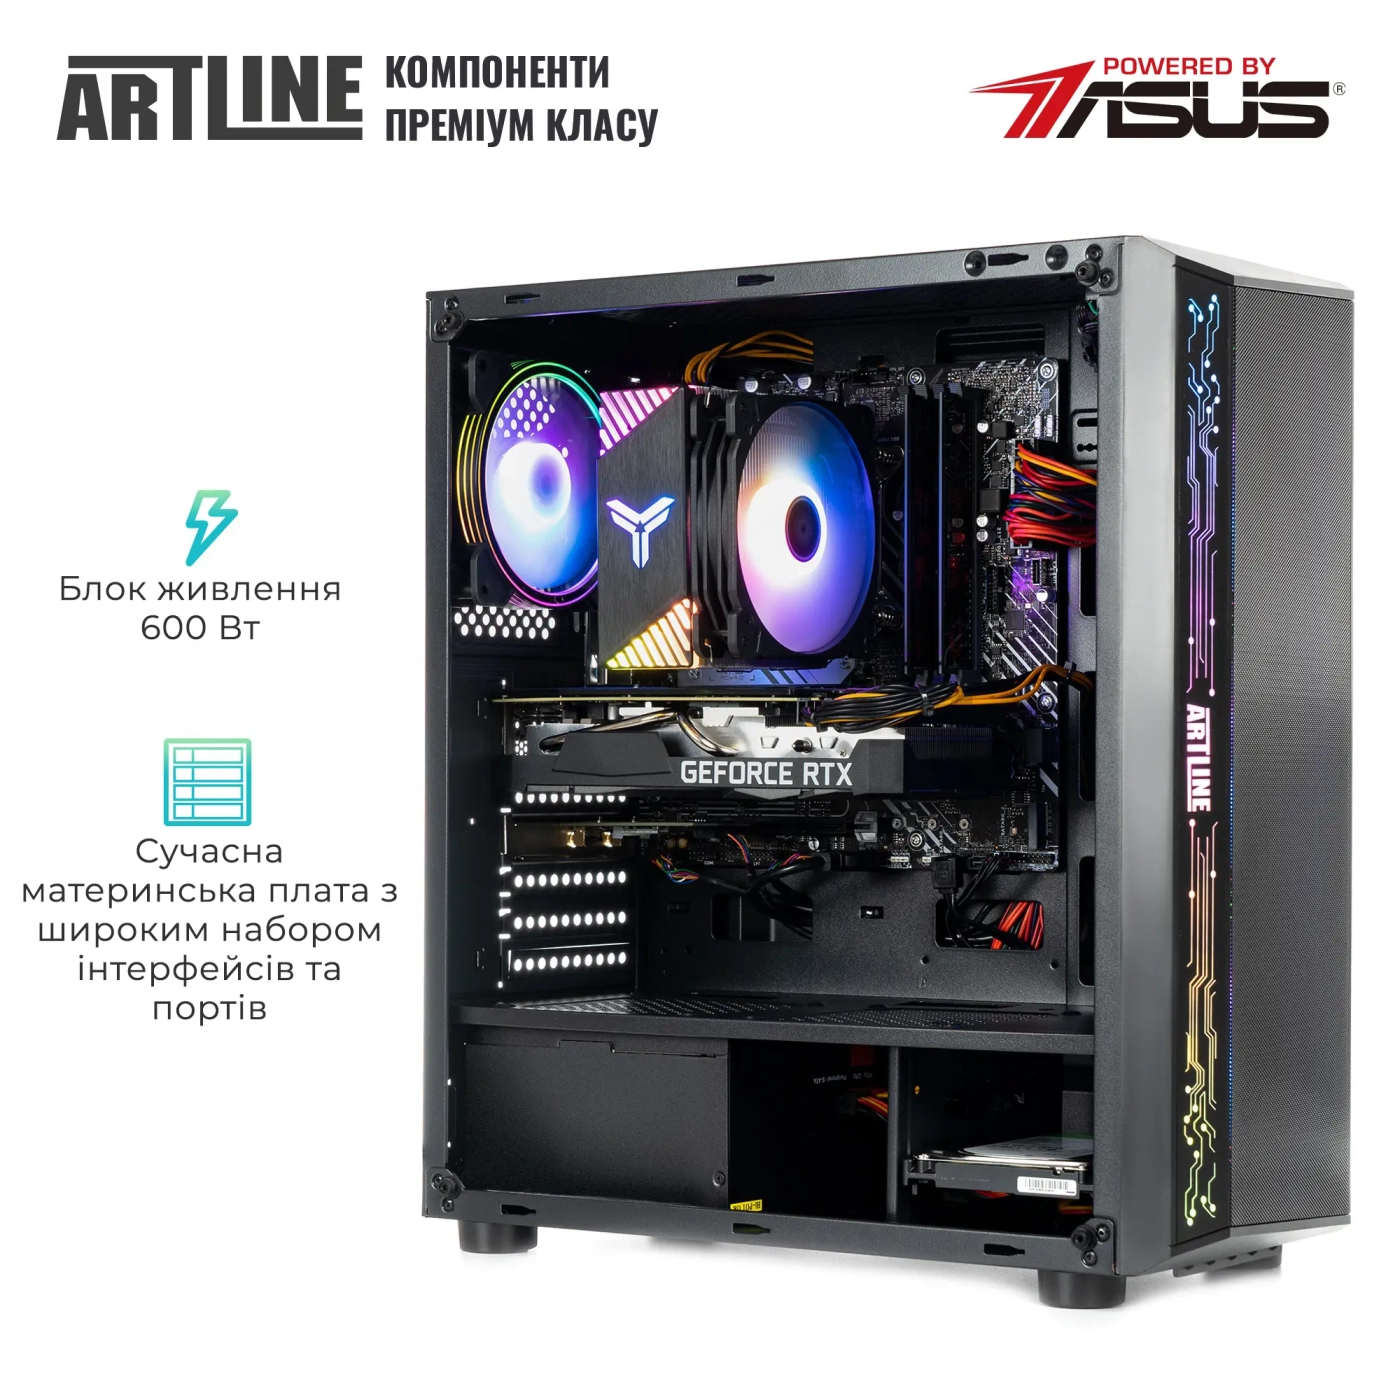 Купить Компьютер ARTLINE Gaming X49 (X49v22) - фото 3